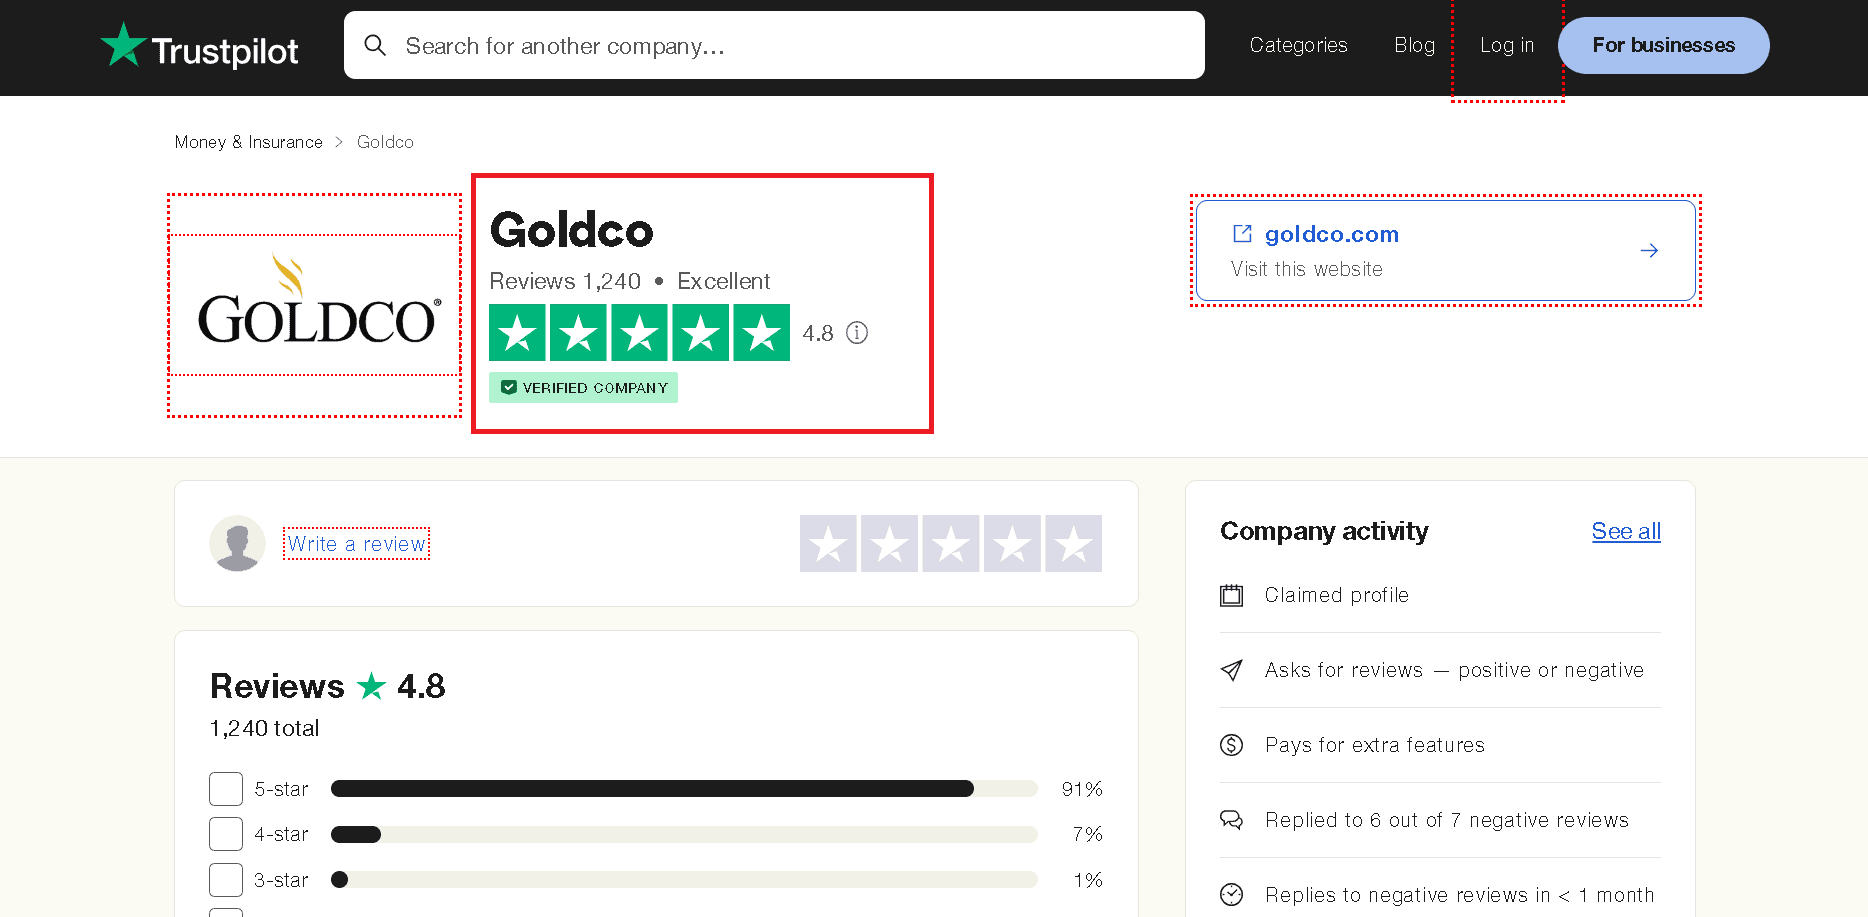 Goldco Trustpilot score and customer reviews